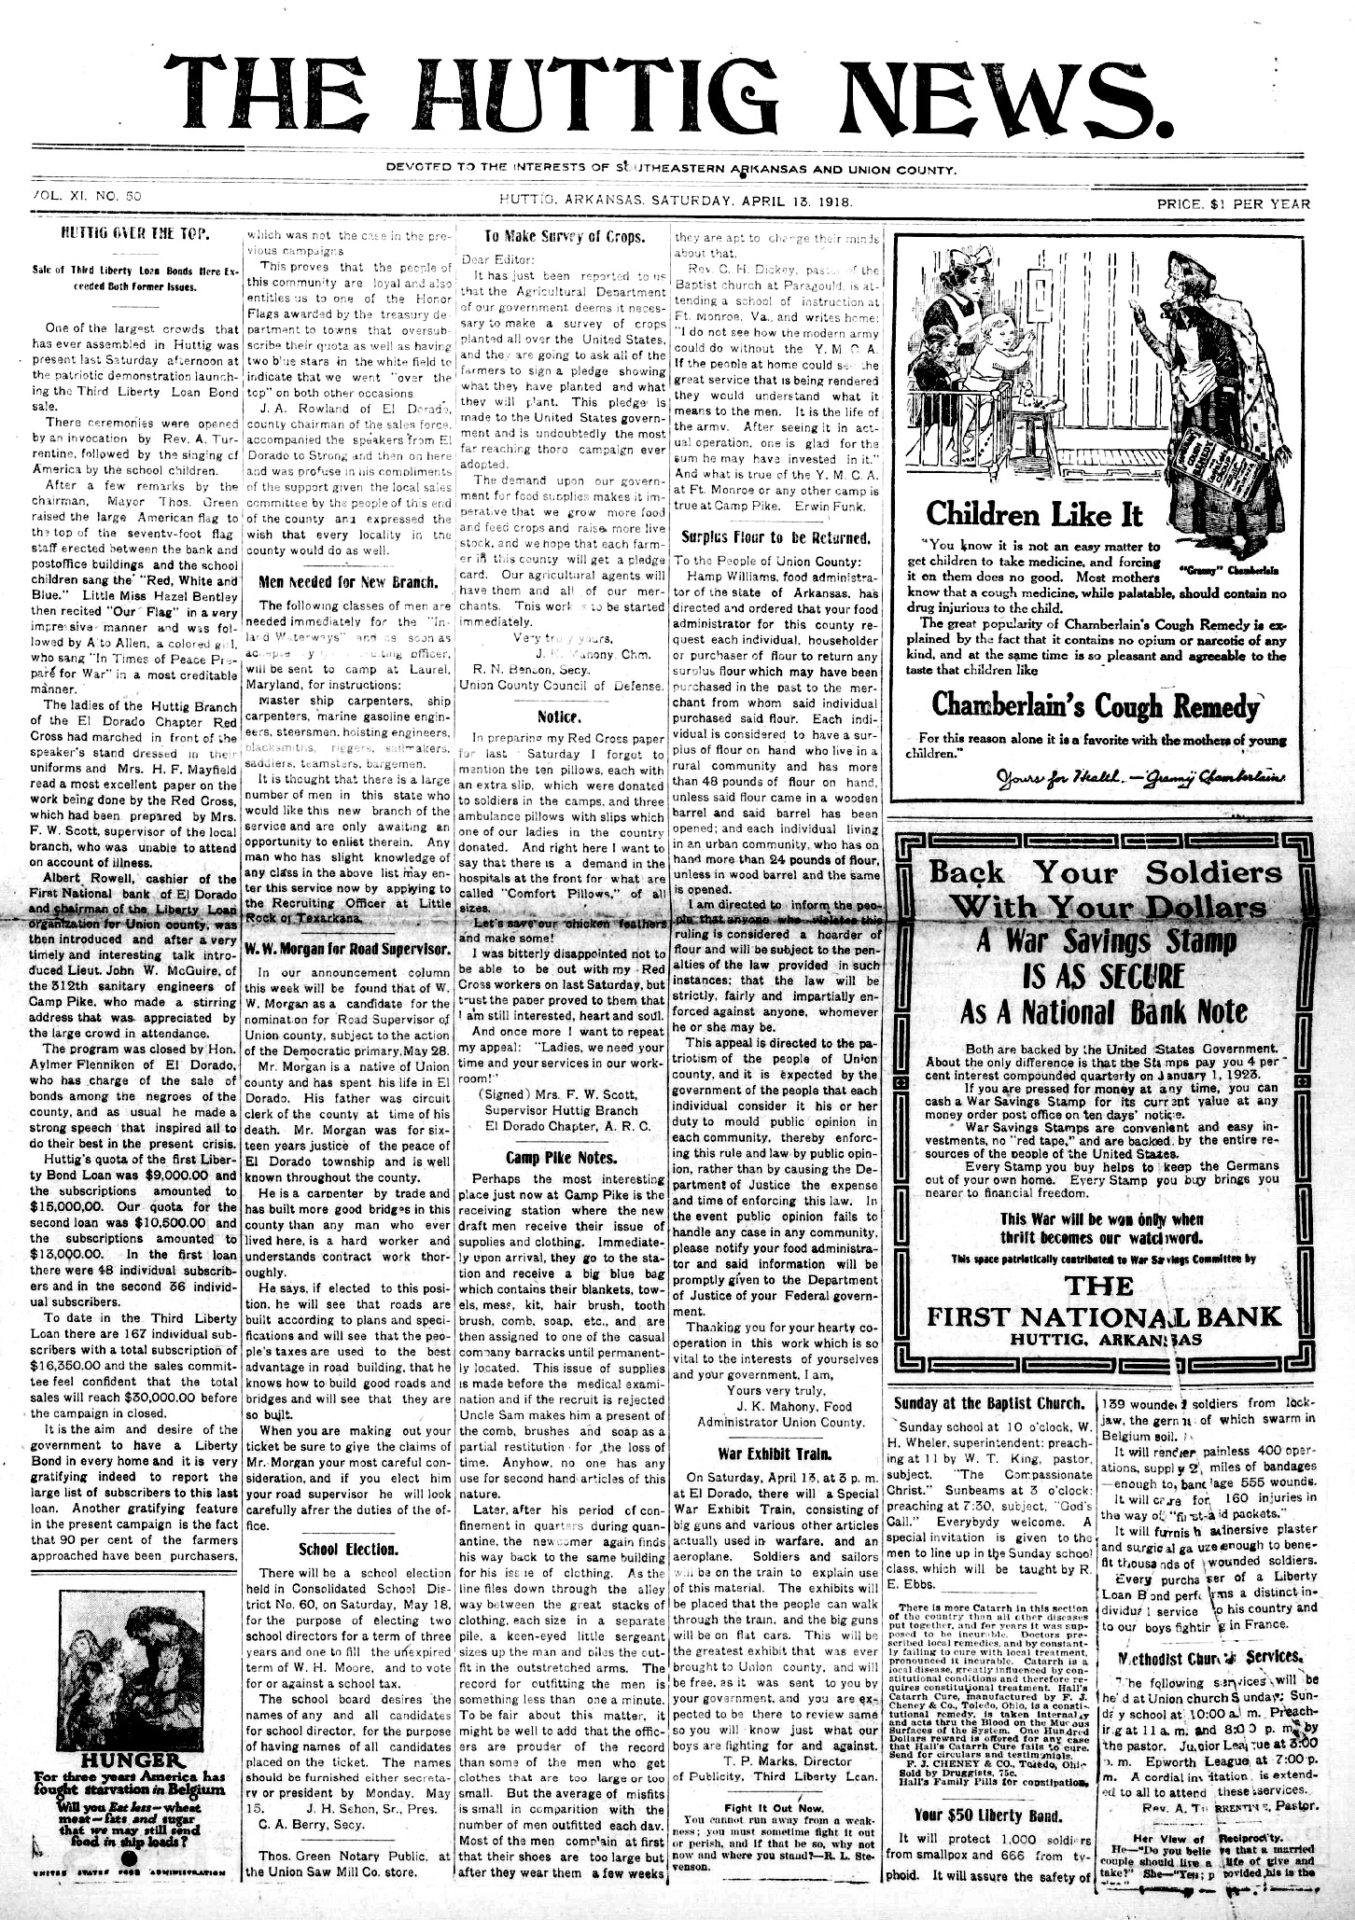 Newspaper front page "Huttig News"